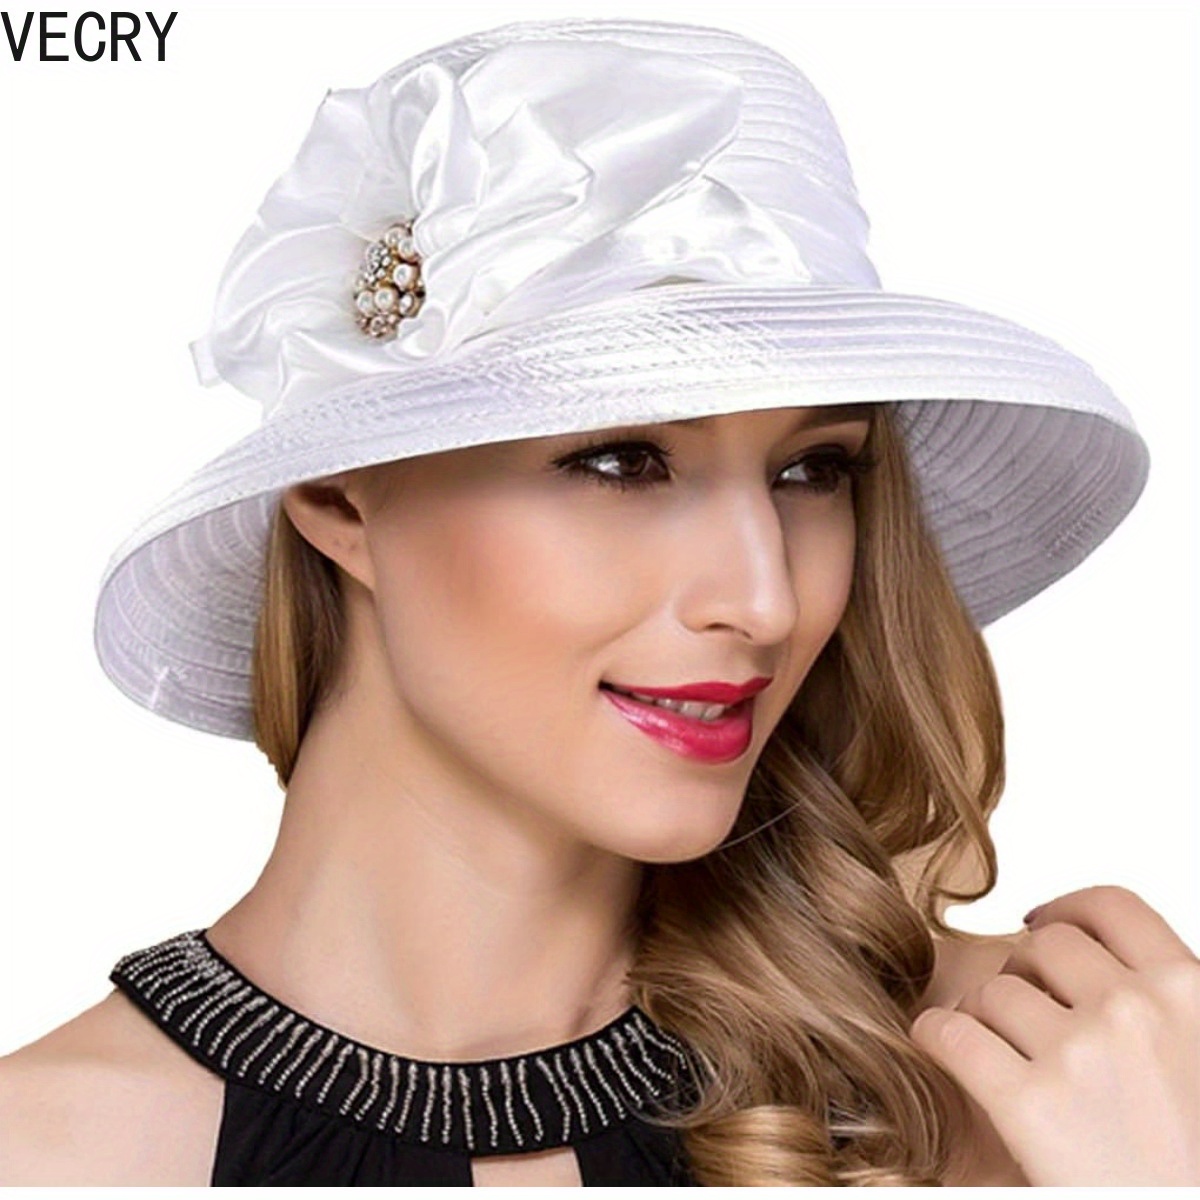 

Vecry Women Derby Church Dress Cloche Hat Tea Party Wedding Bucket Hat Trendy Head Decoration